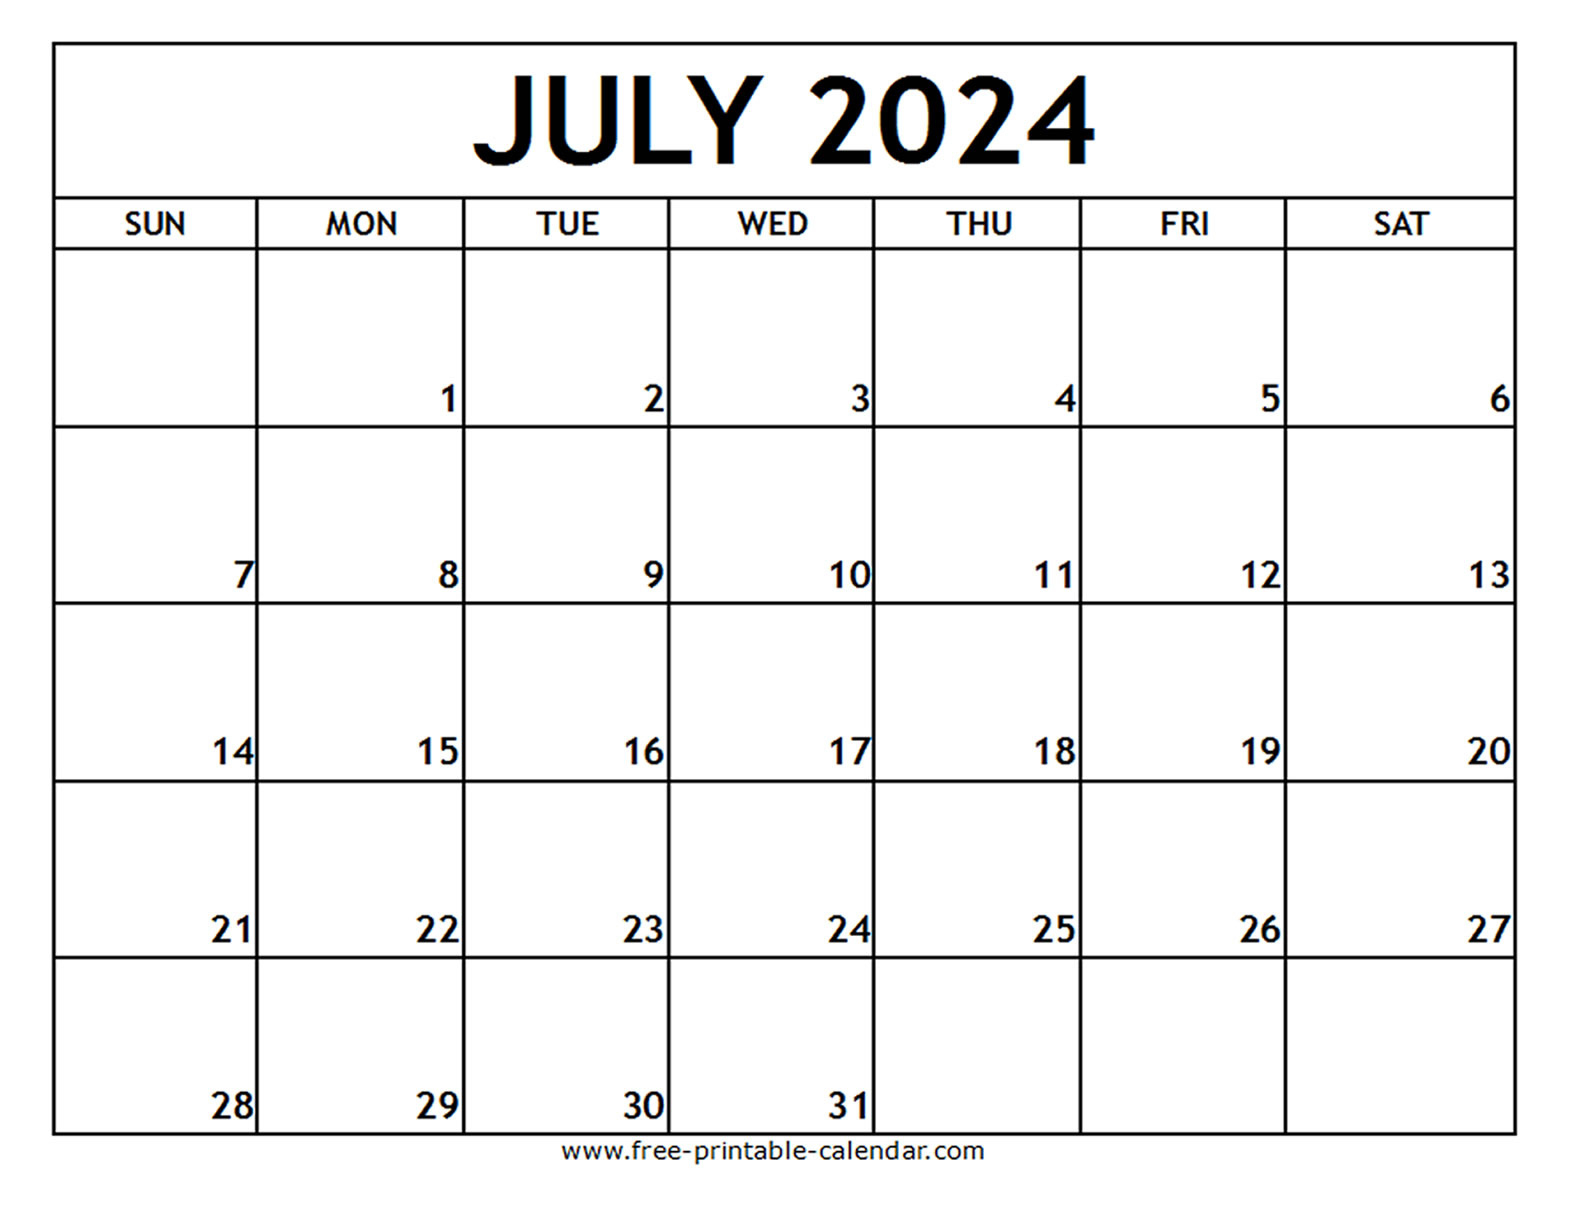 July 2024 Printable Calendar - Free-Printable-Calendar throughout Free July Calendar Template 2024